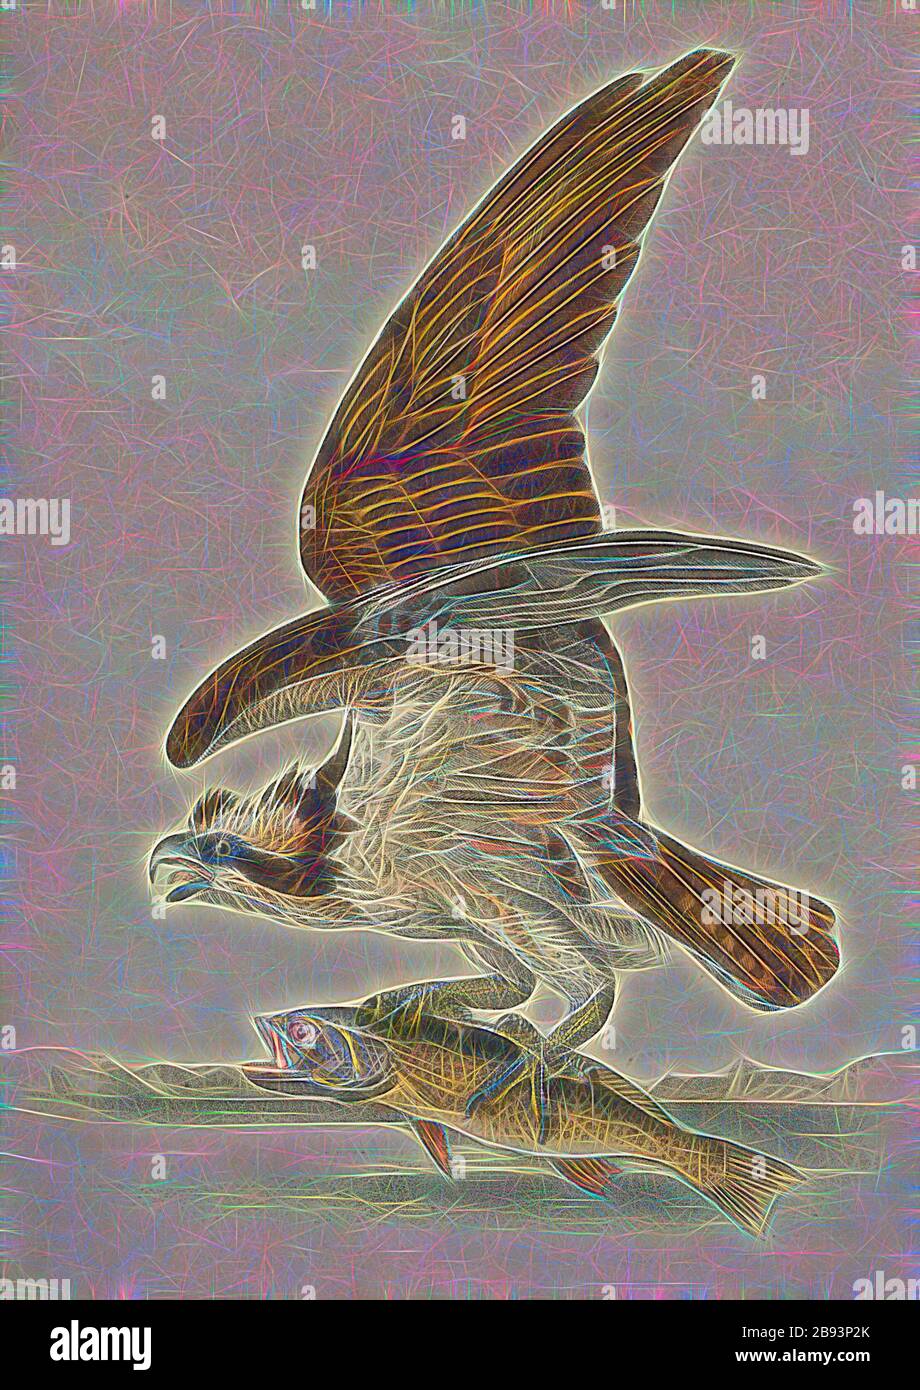 Audubon birds of america osprey hi-res stock photography and images - Alamy